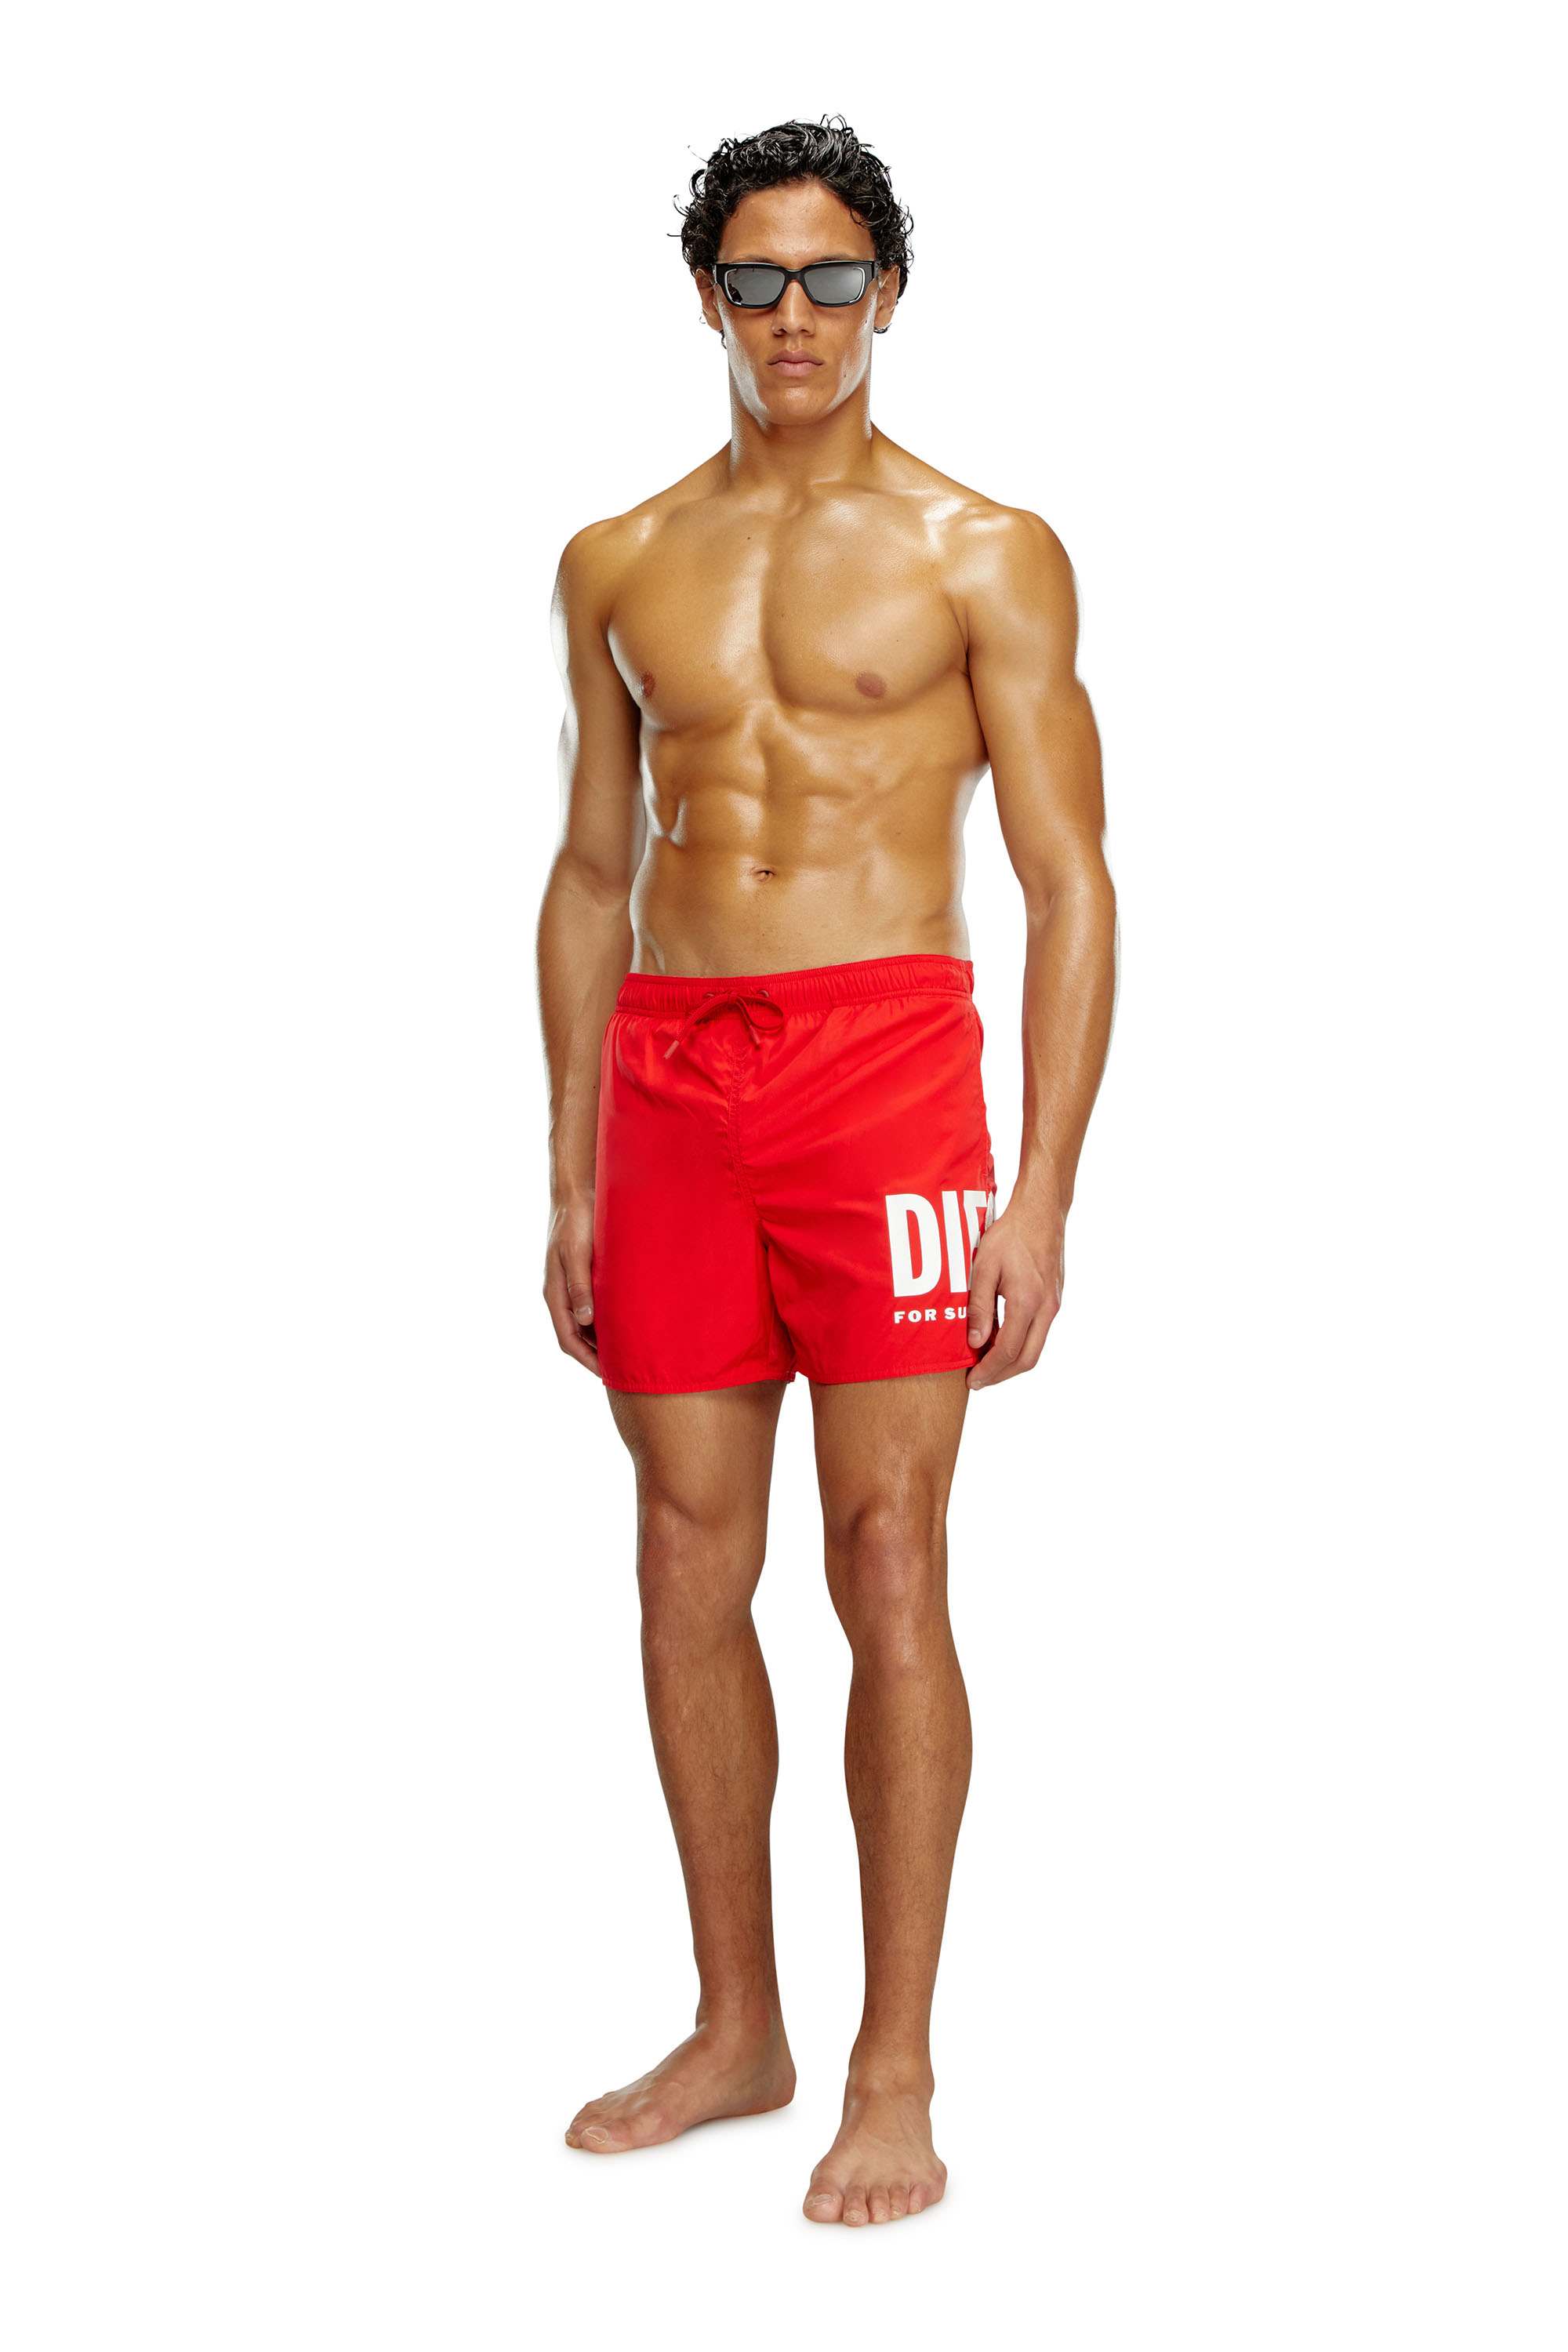 BMBX-NICO, Red - Swim shorts